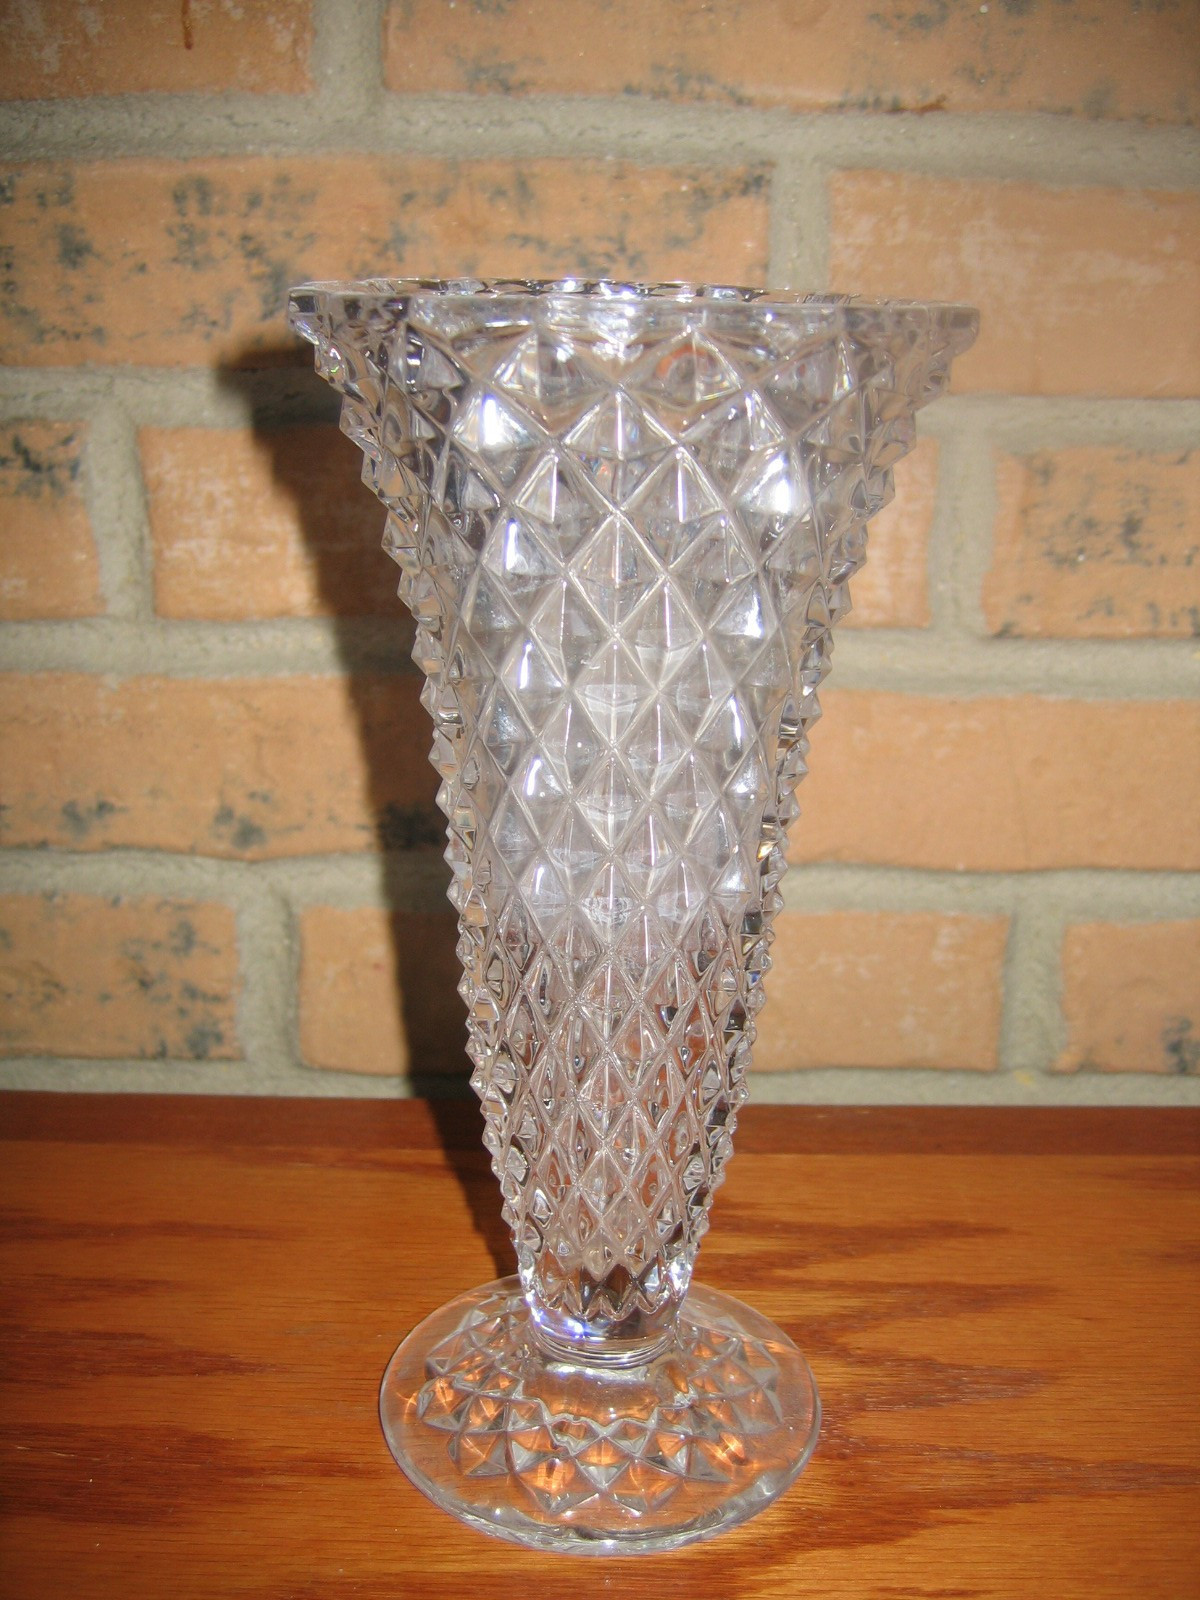 vintage crystal vase of antique glass vase images glass vase decoration ideas will clipart inside antique glass vase images glass vase decoration ideas will clipart colored flower vase clip